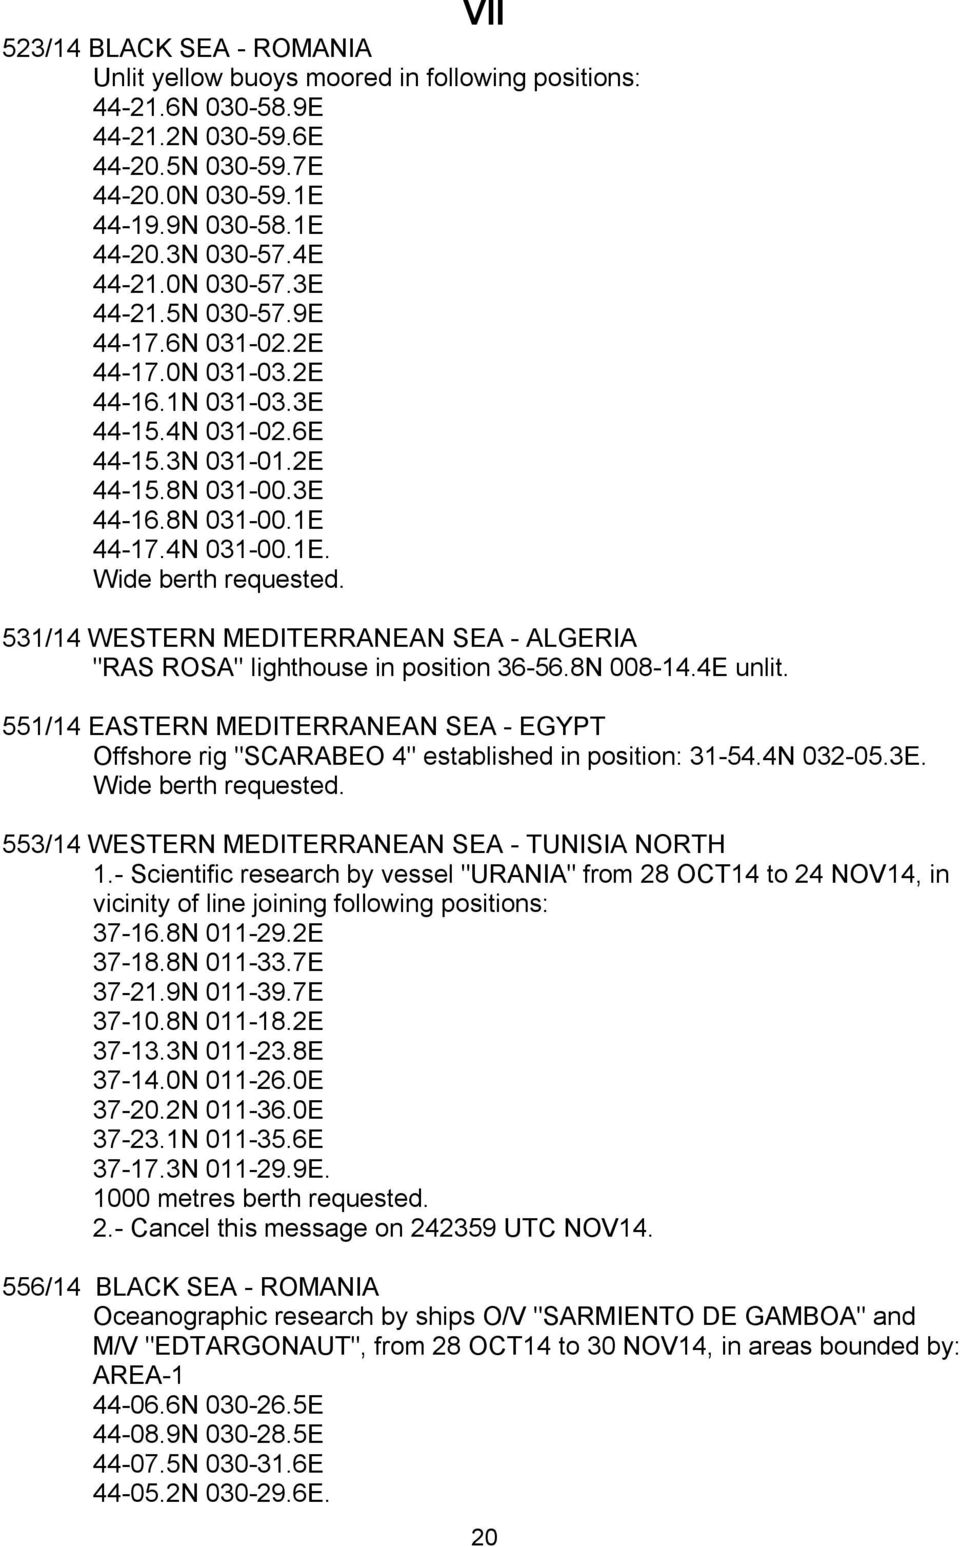 531/14 WESTERN MEDITERRANEAN SEA - ALGERIA "RAS ROSA" lighthouse in position 36-56.8N 008-14.4E unlit.